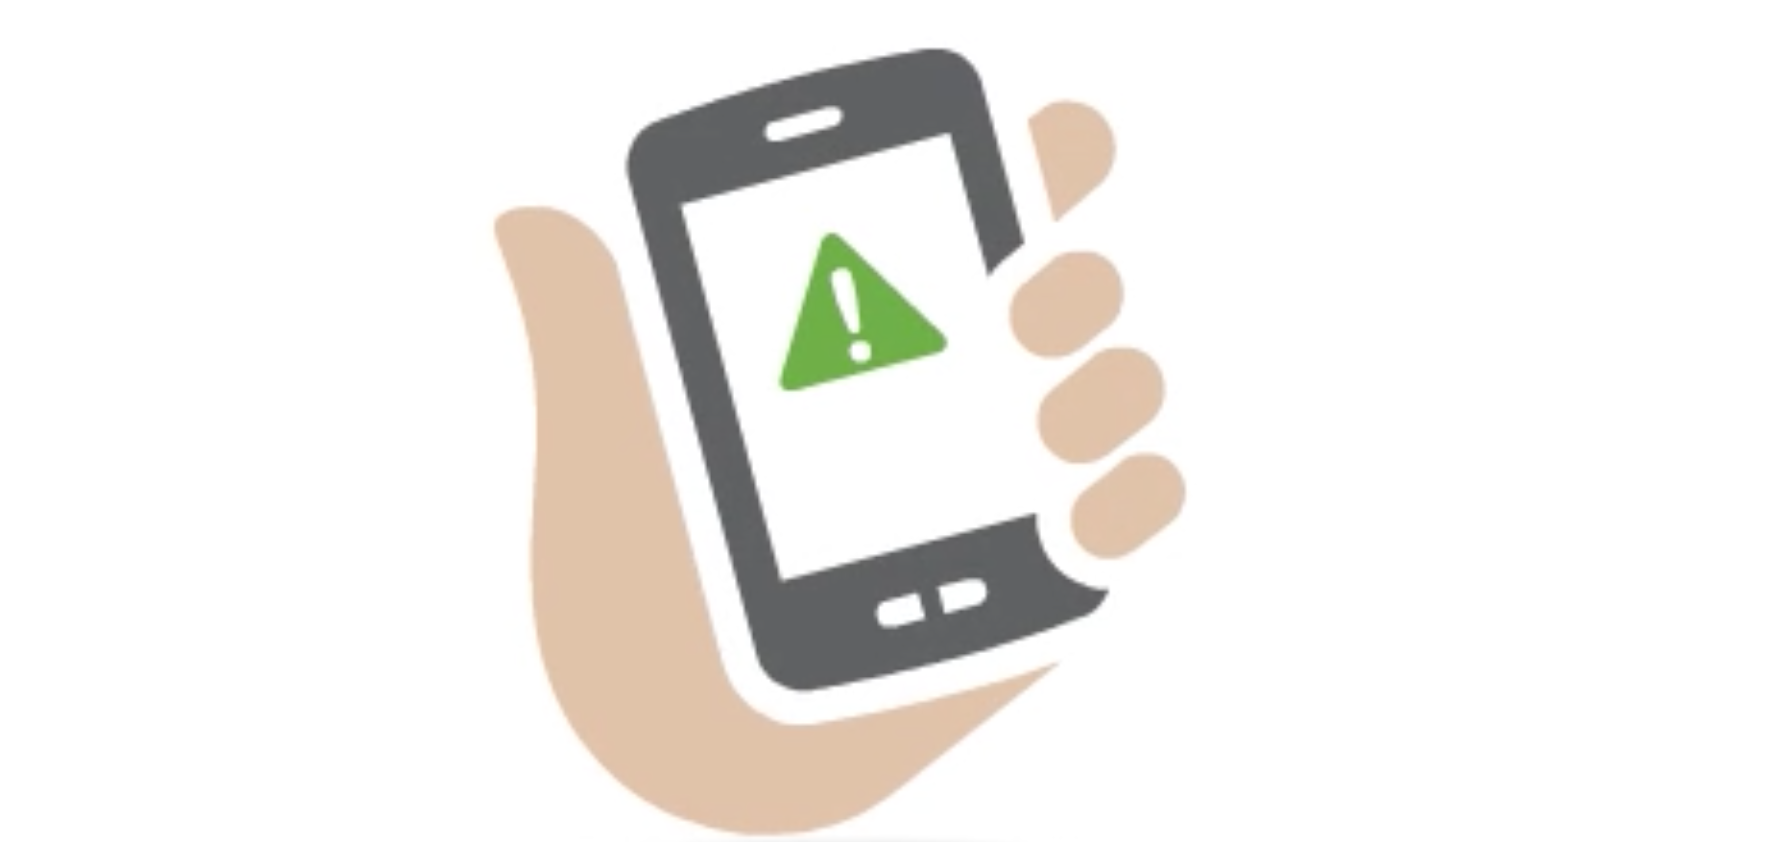 mobile alert icon